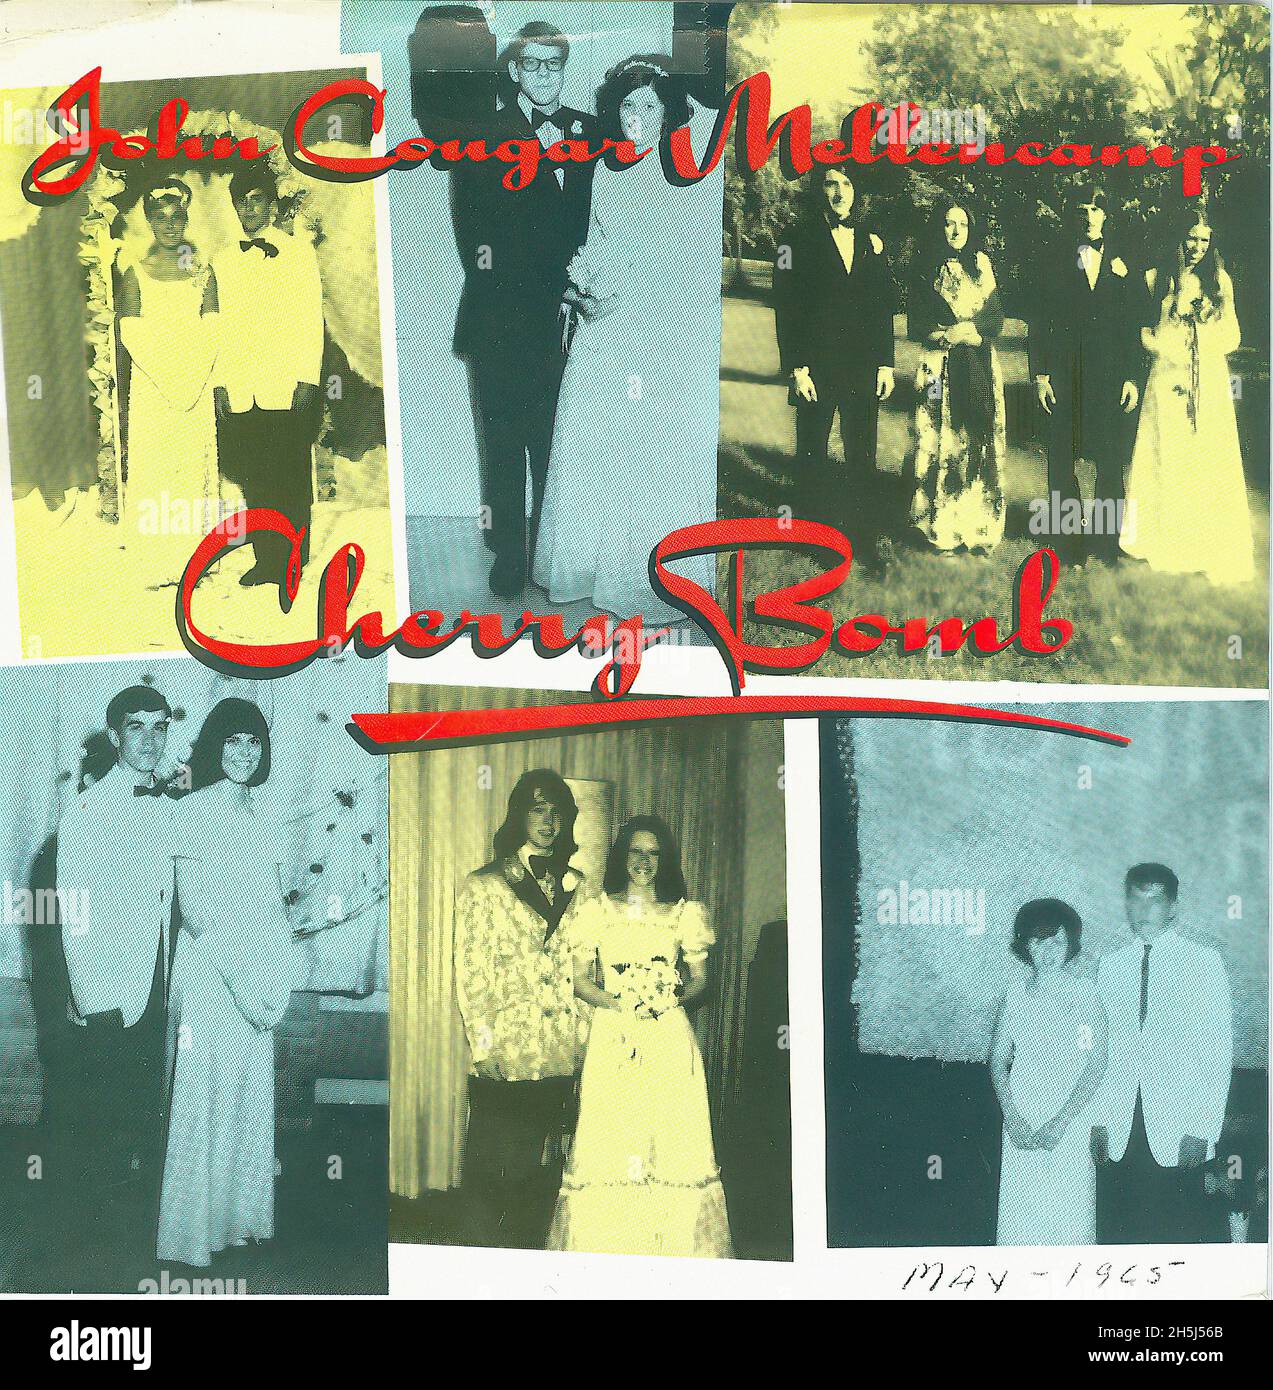 Vintage single record cover - Mellencamp, John Cougar - Cherry Bomb - UK - 1987 Stock Photo